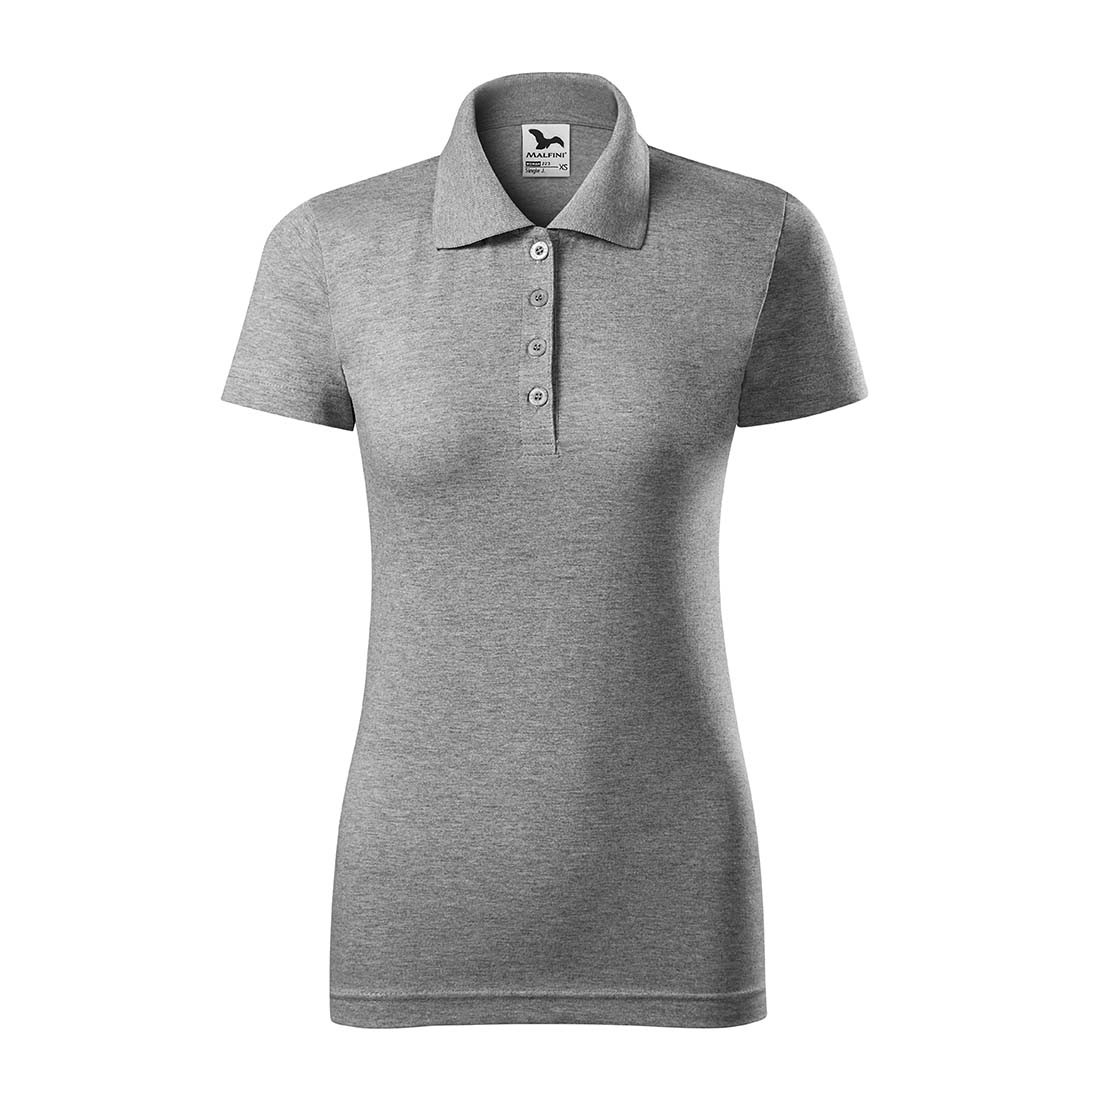 Damen-Poloshirt - Arbeitskleidung